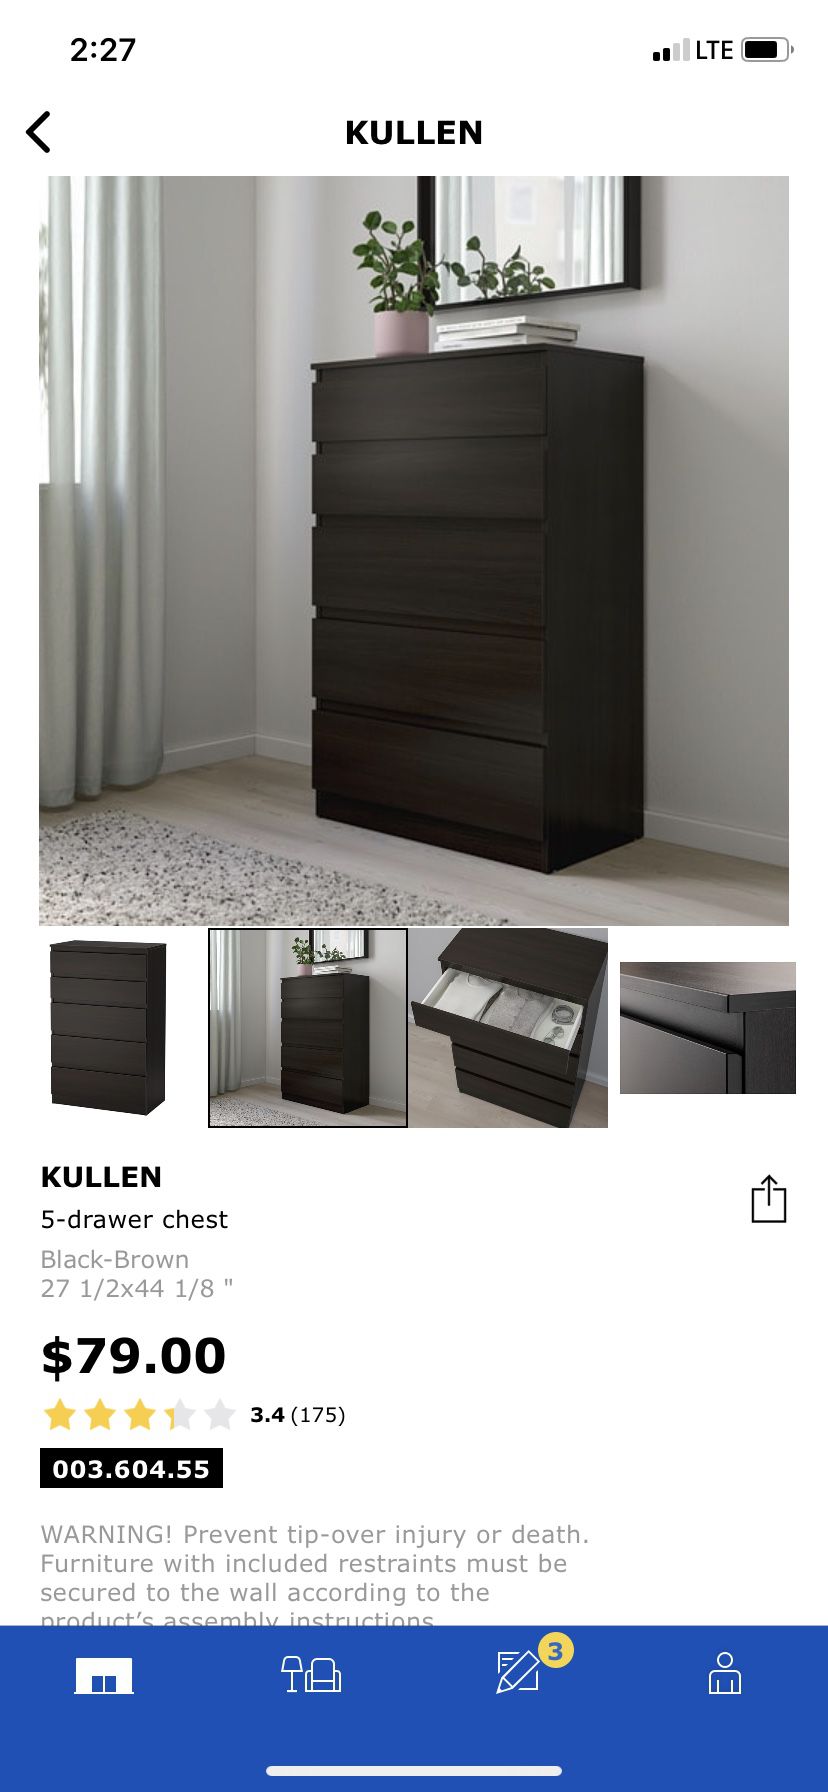 IKEA Killeen 5-drawer chest